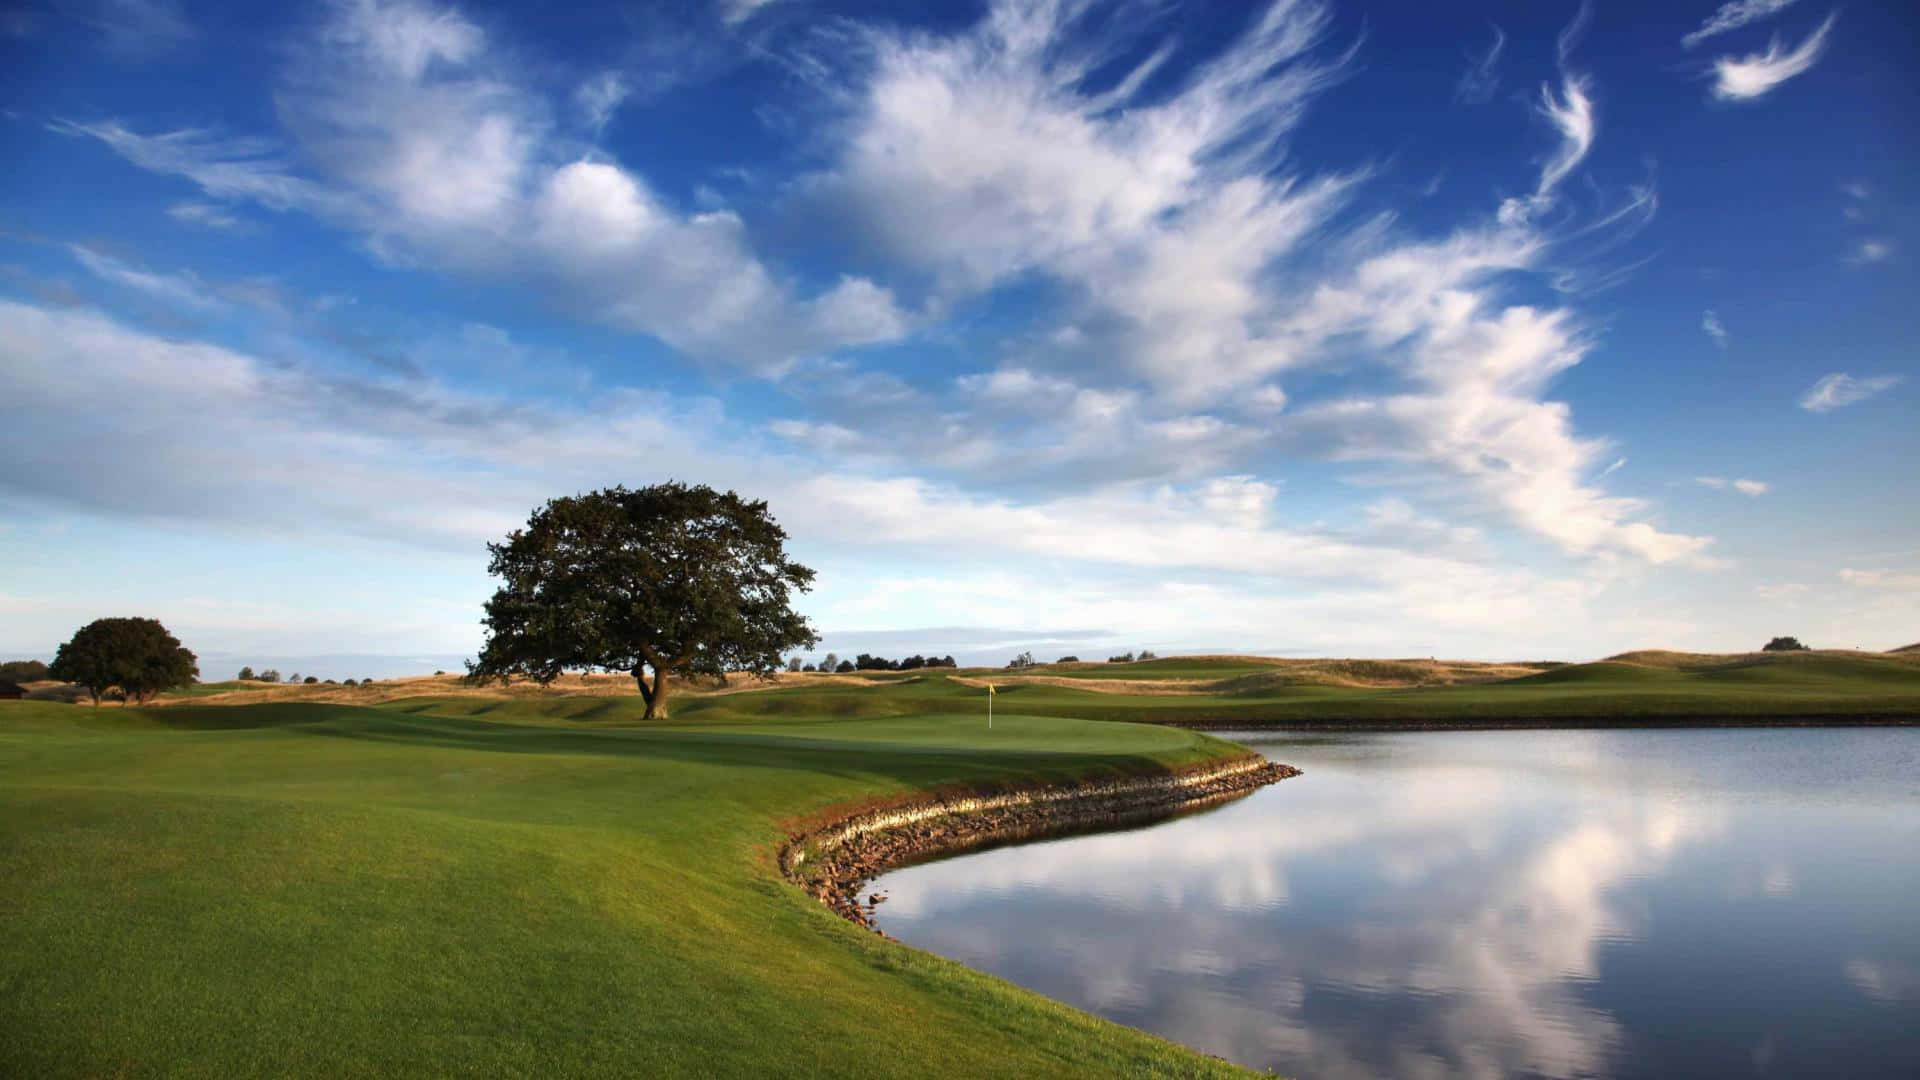 Oxfordshirehd Golf Course Bakgrundsbild.